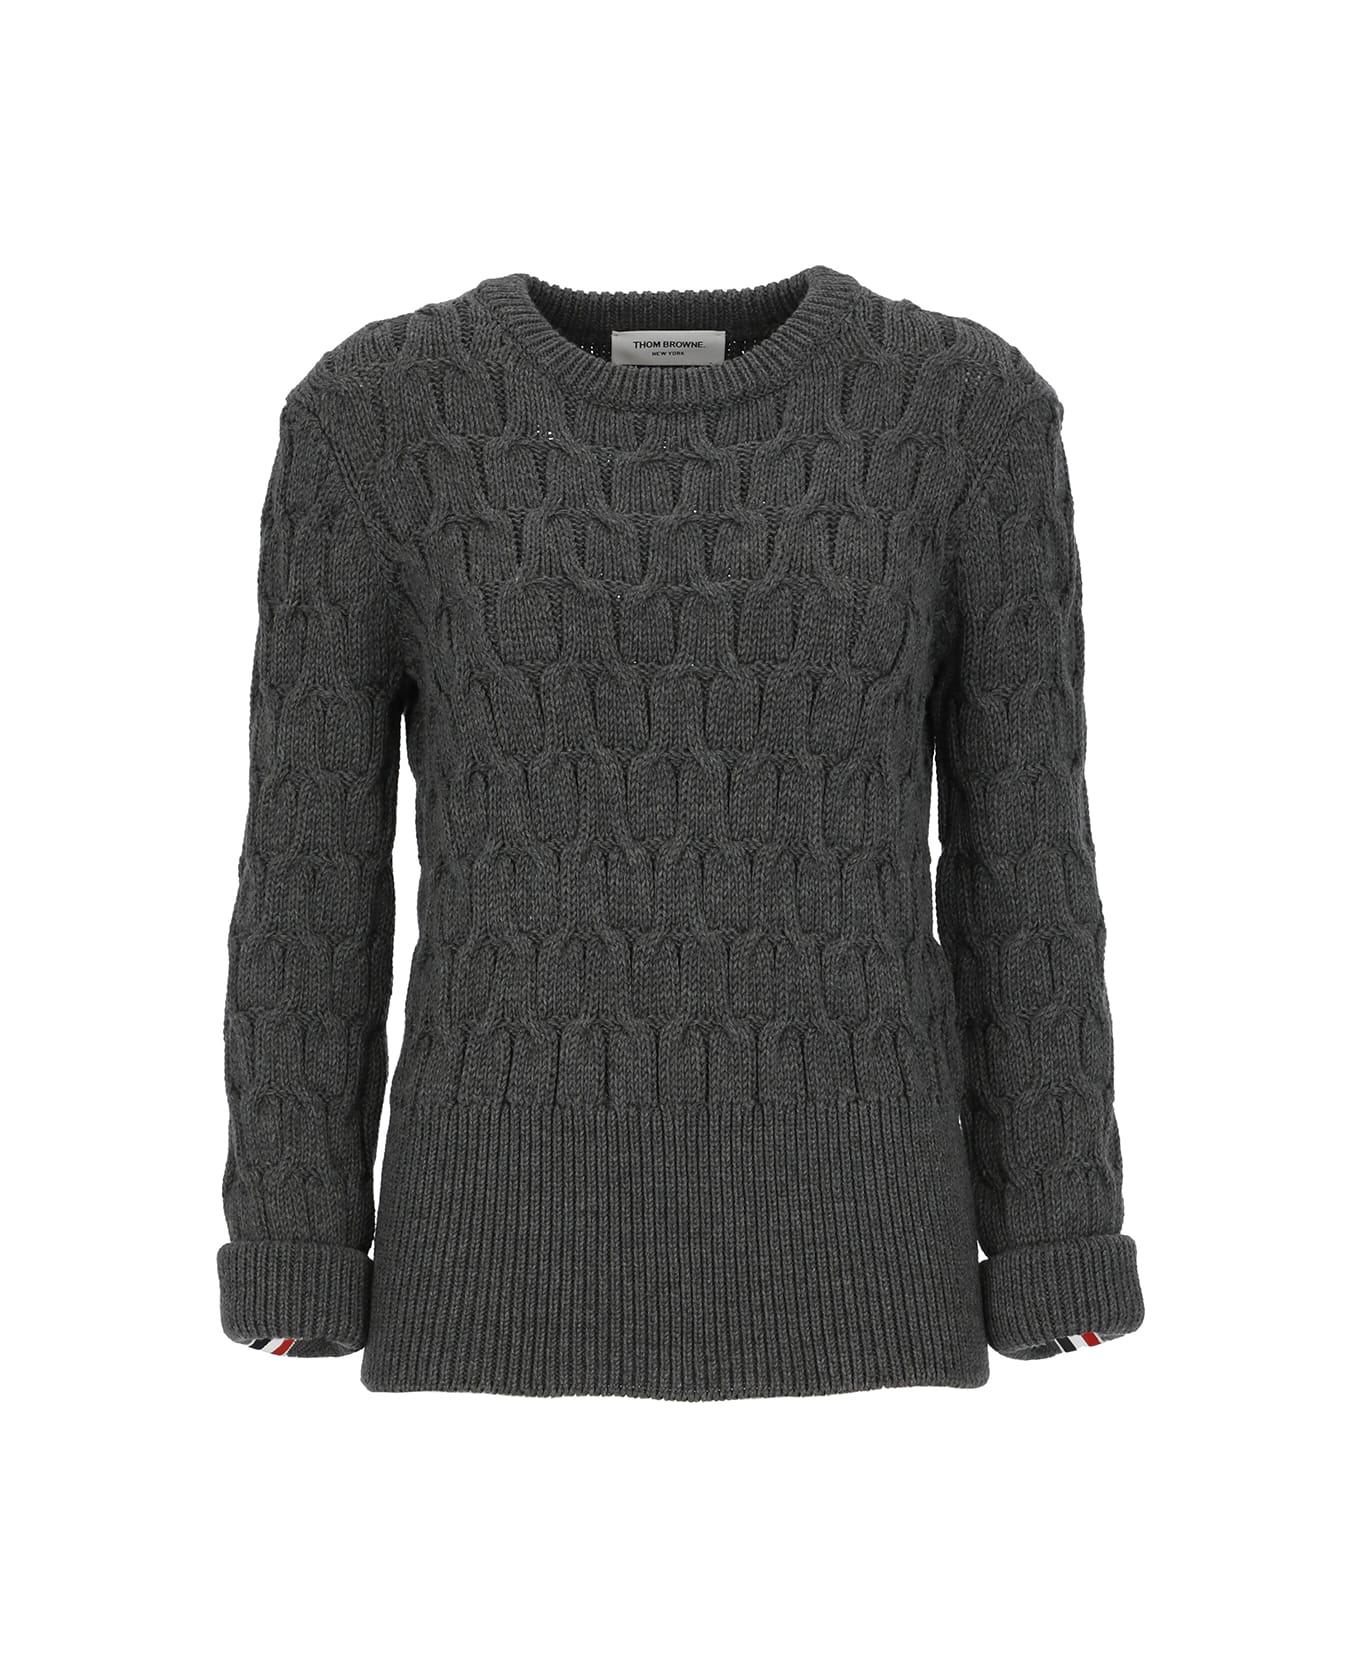 Thom Browne Sweater - Grey ニットウェア